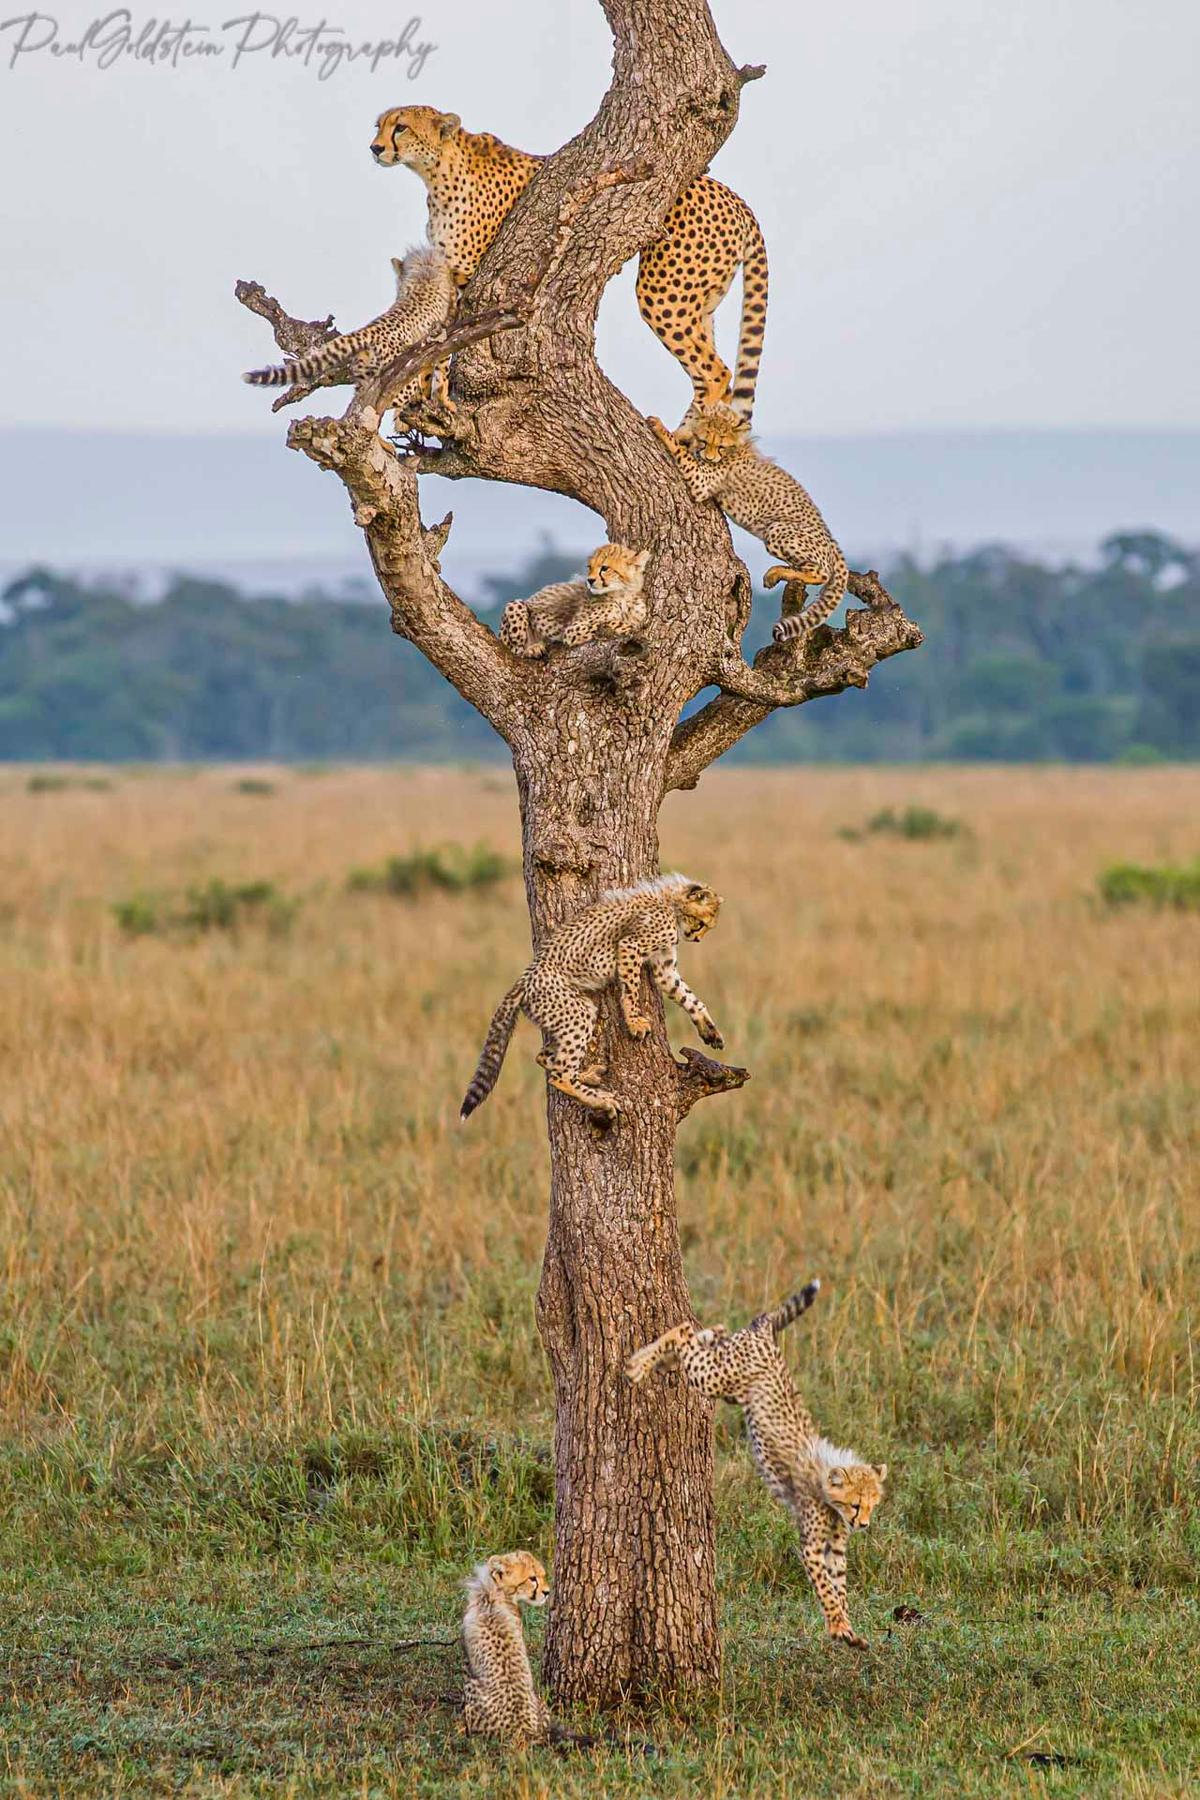 Mara reserve cheetah family. (Courtesy ofPaul Goldstein)